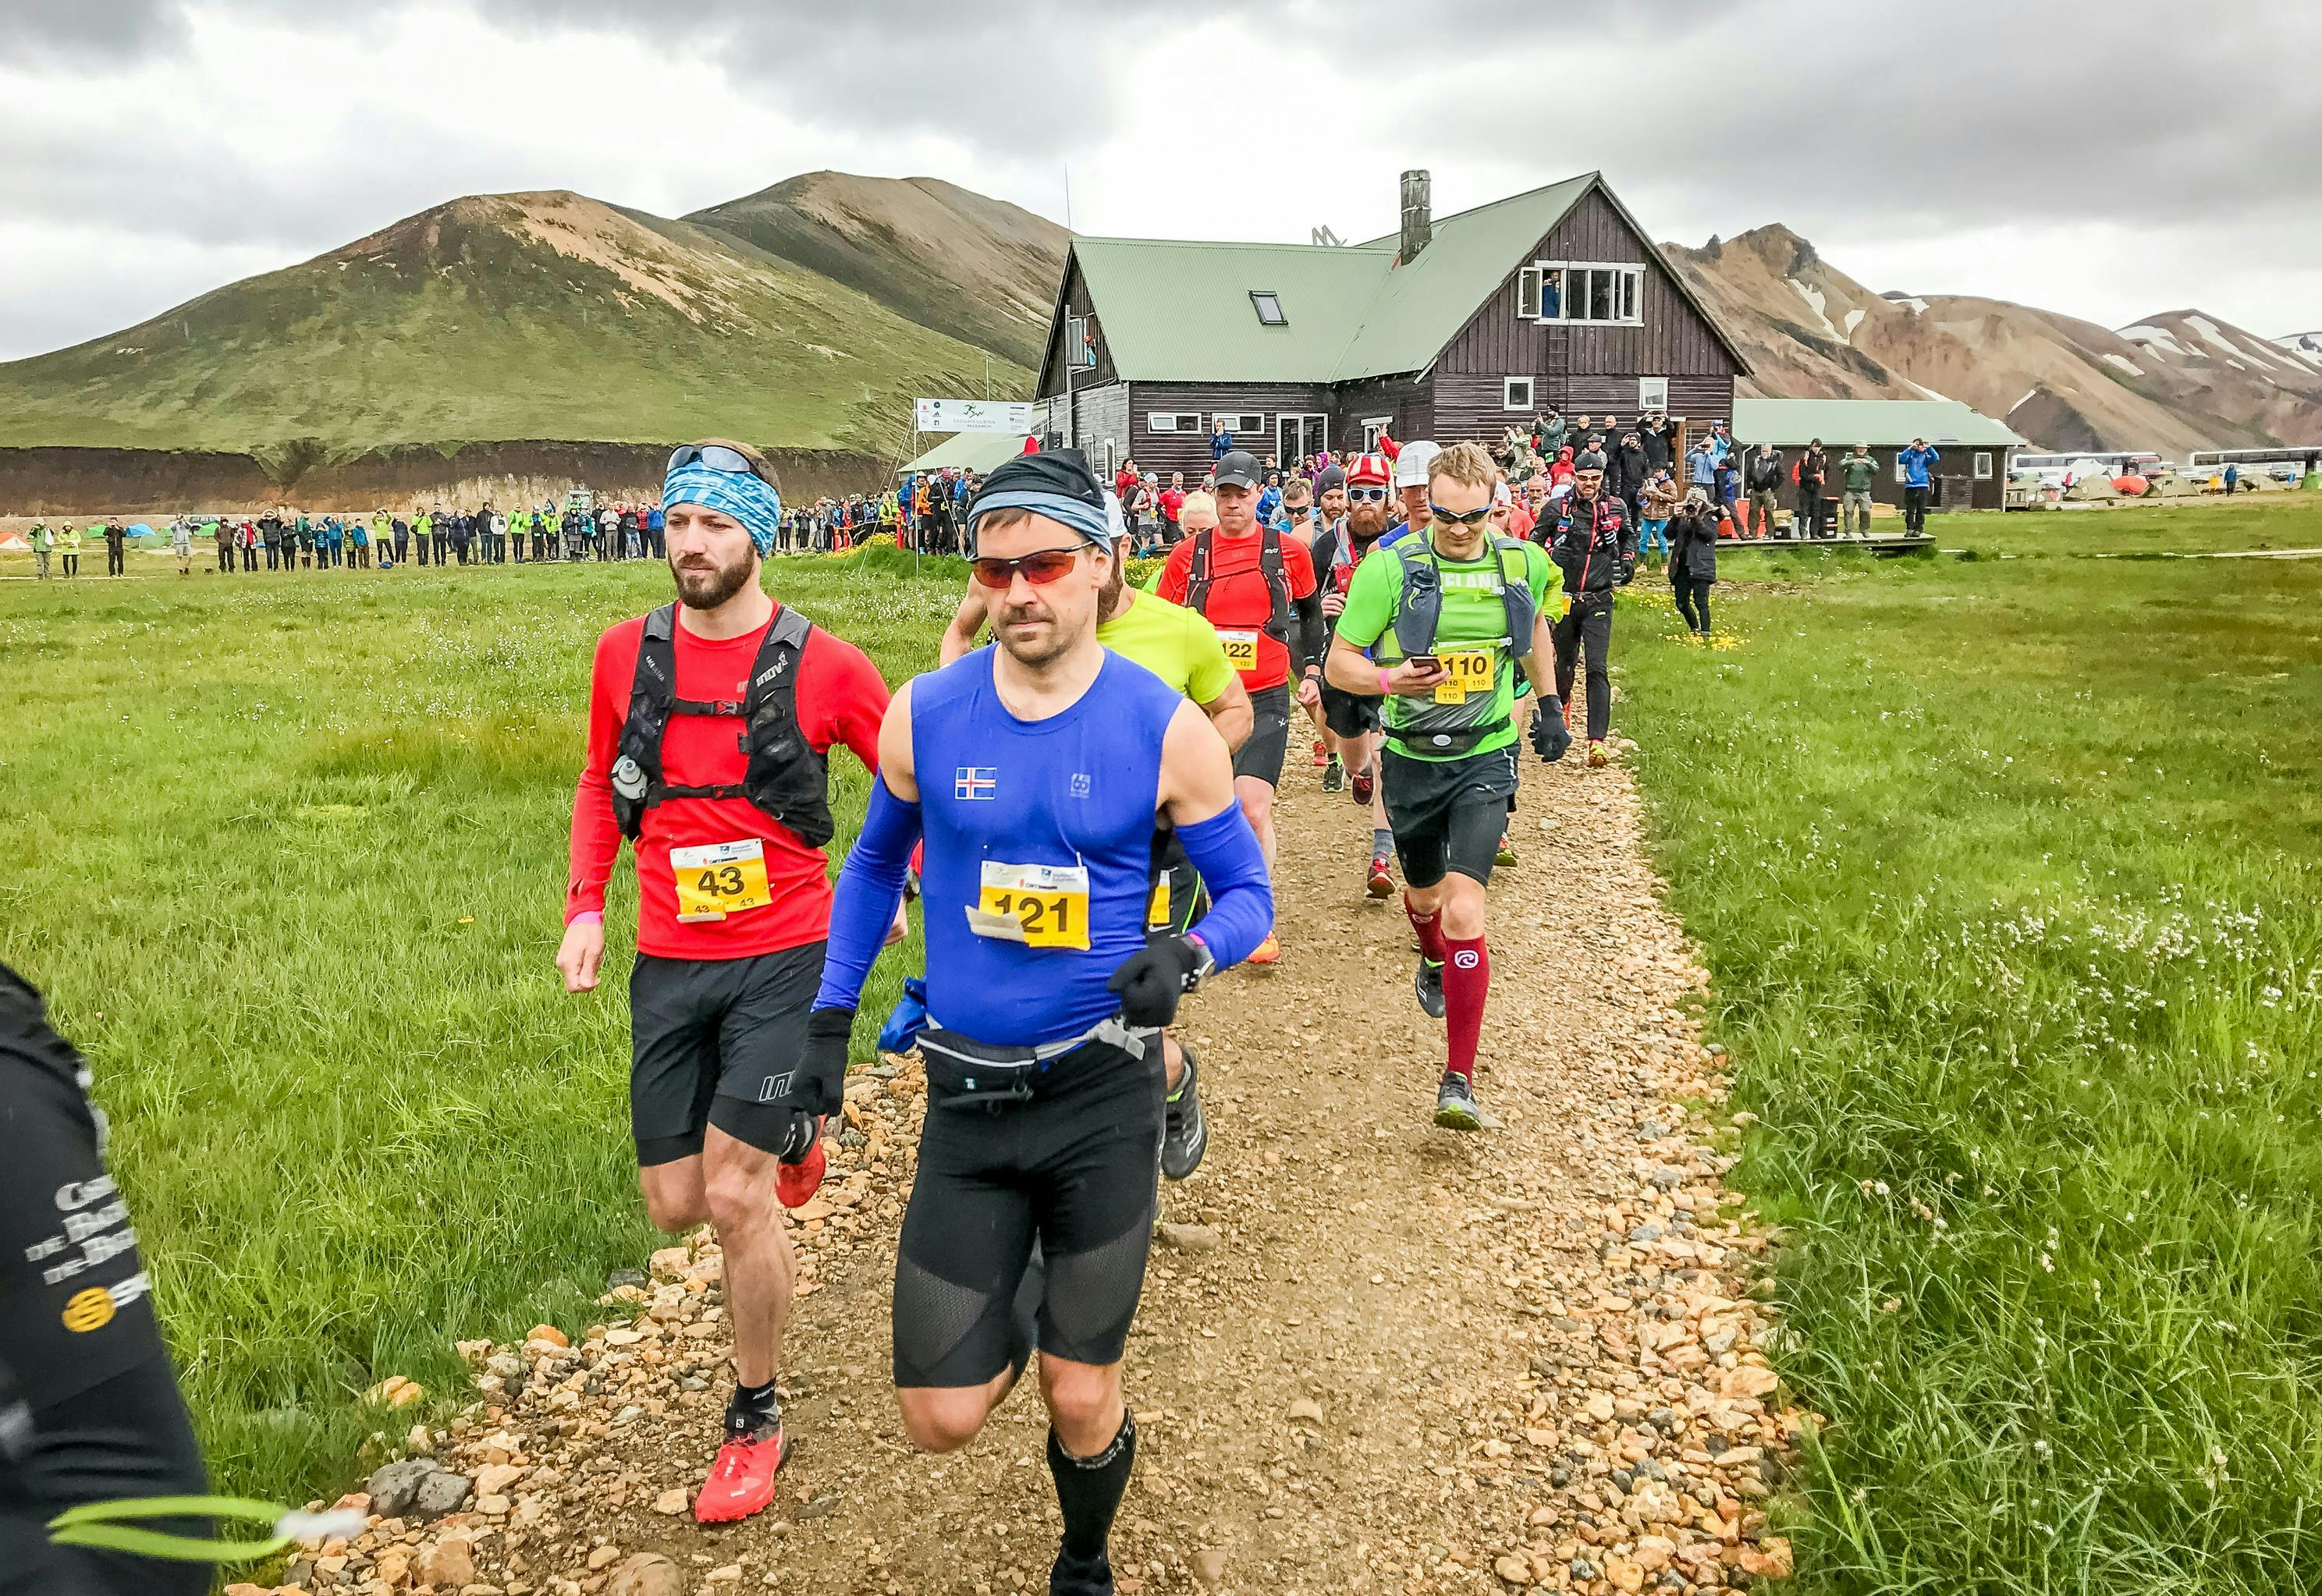 Runners starting the race in Landmannalaugar